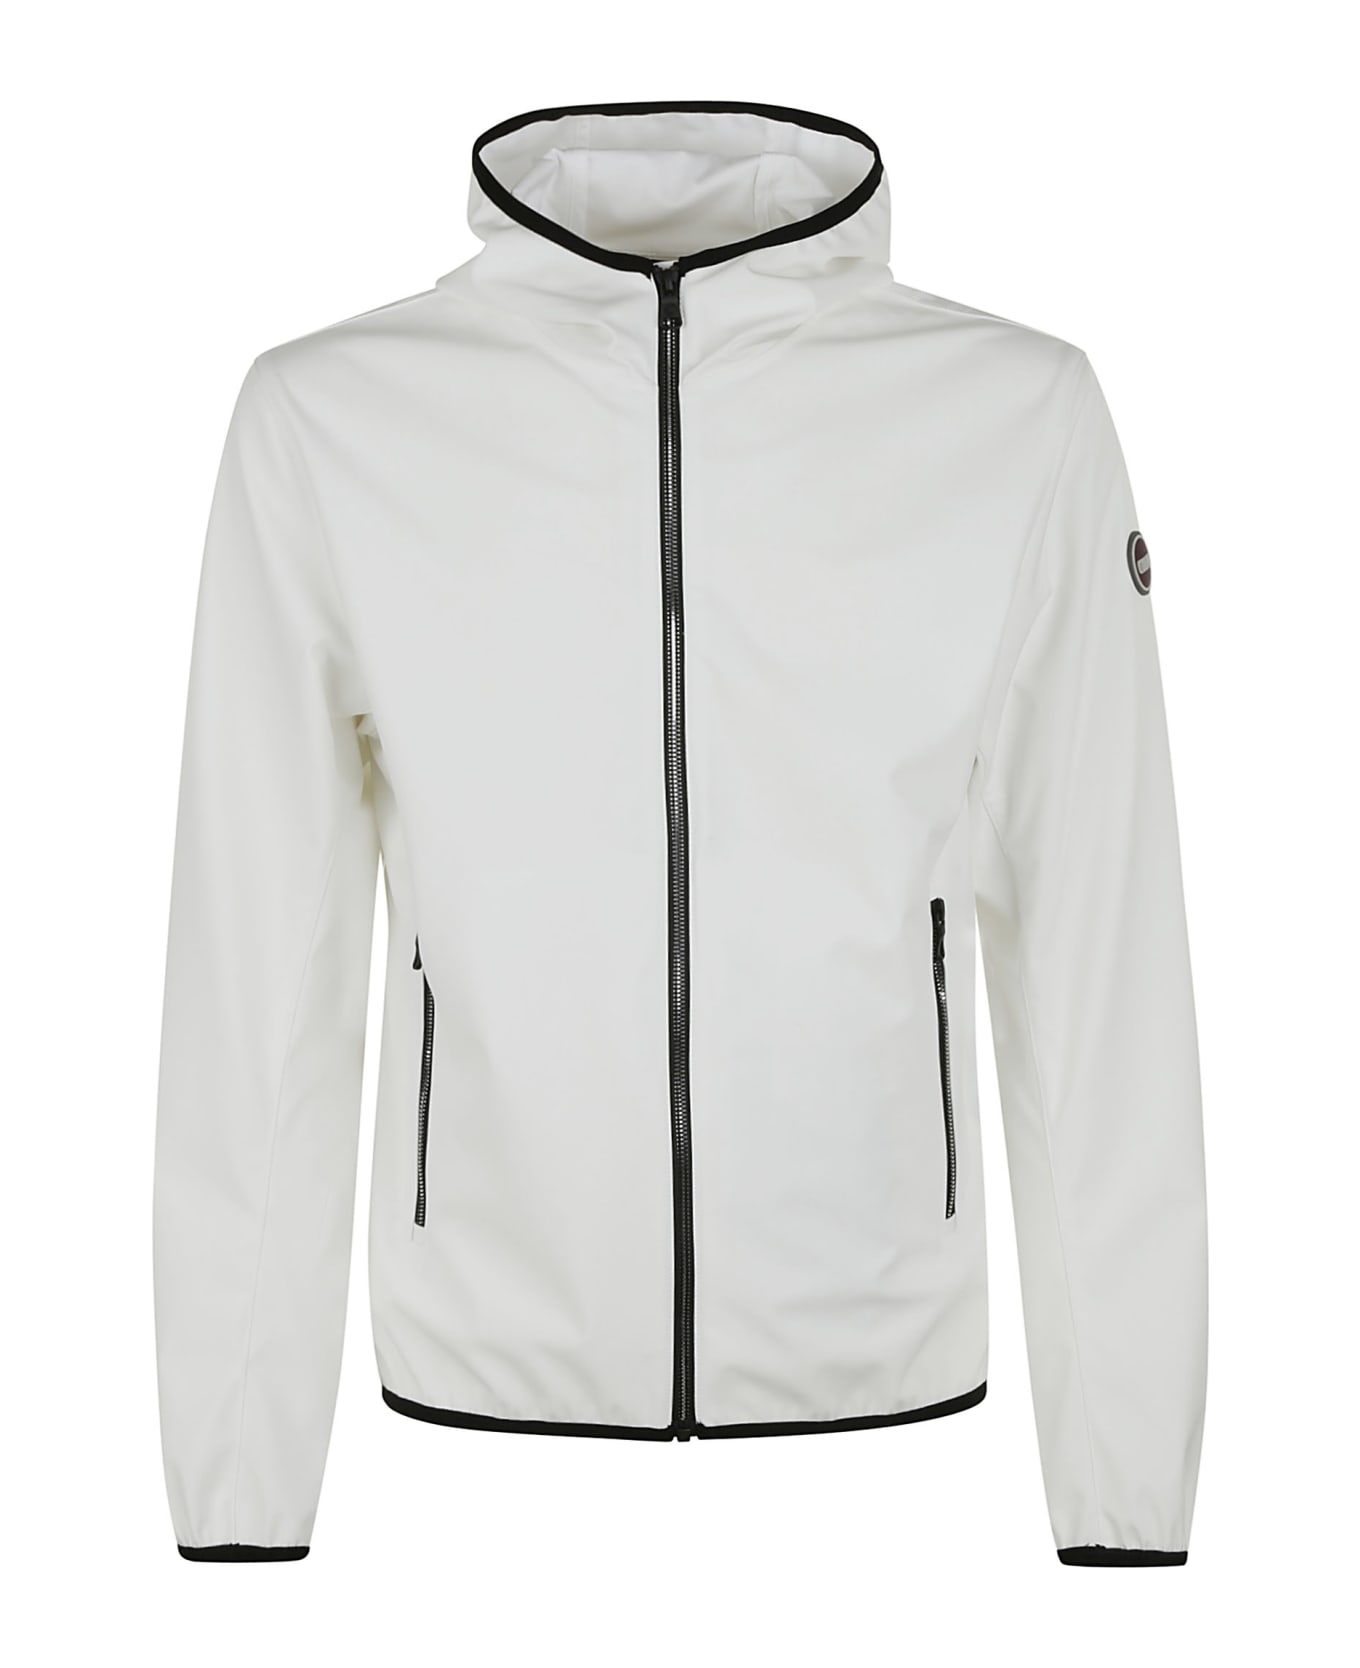 Colmar New Futurity Jacket - White ジャケット